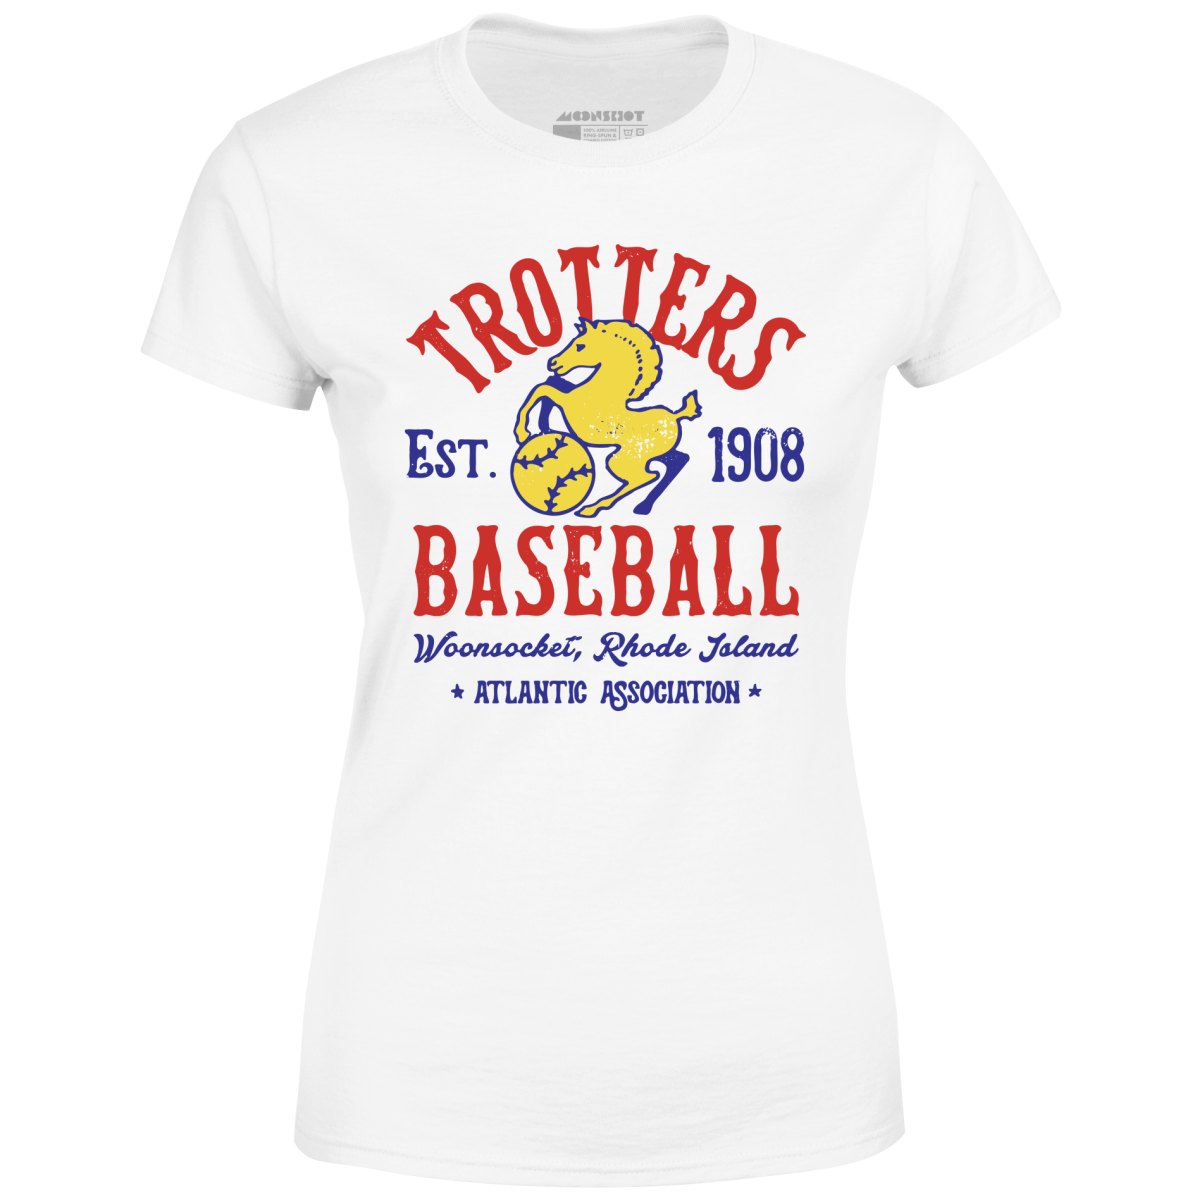 Woonsocket Trotters - Rhode Island - Vintage Defunct Baseball Teams - Women's T-Shirt